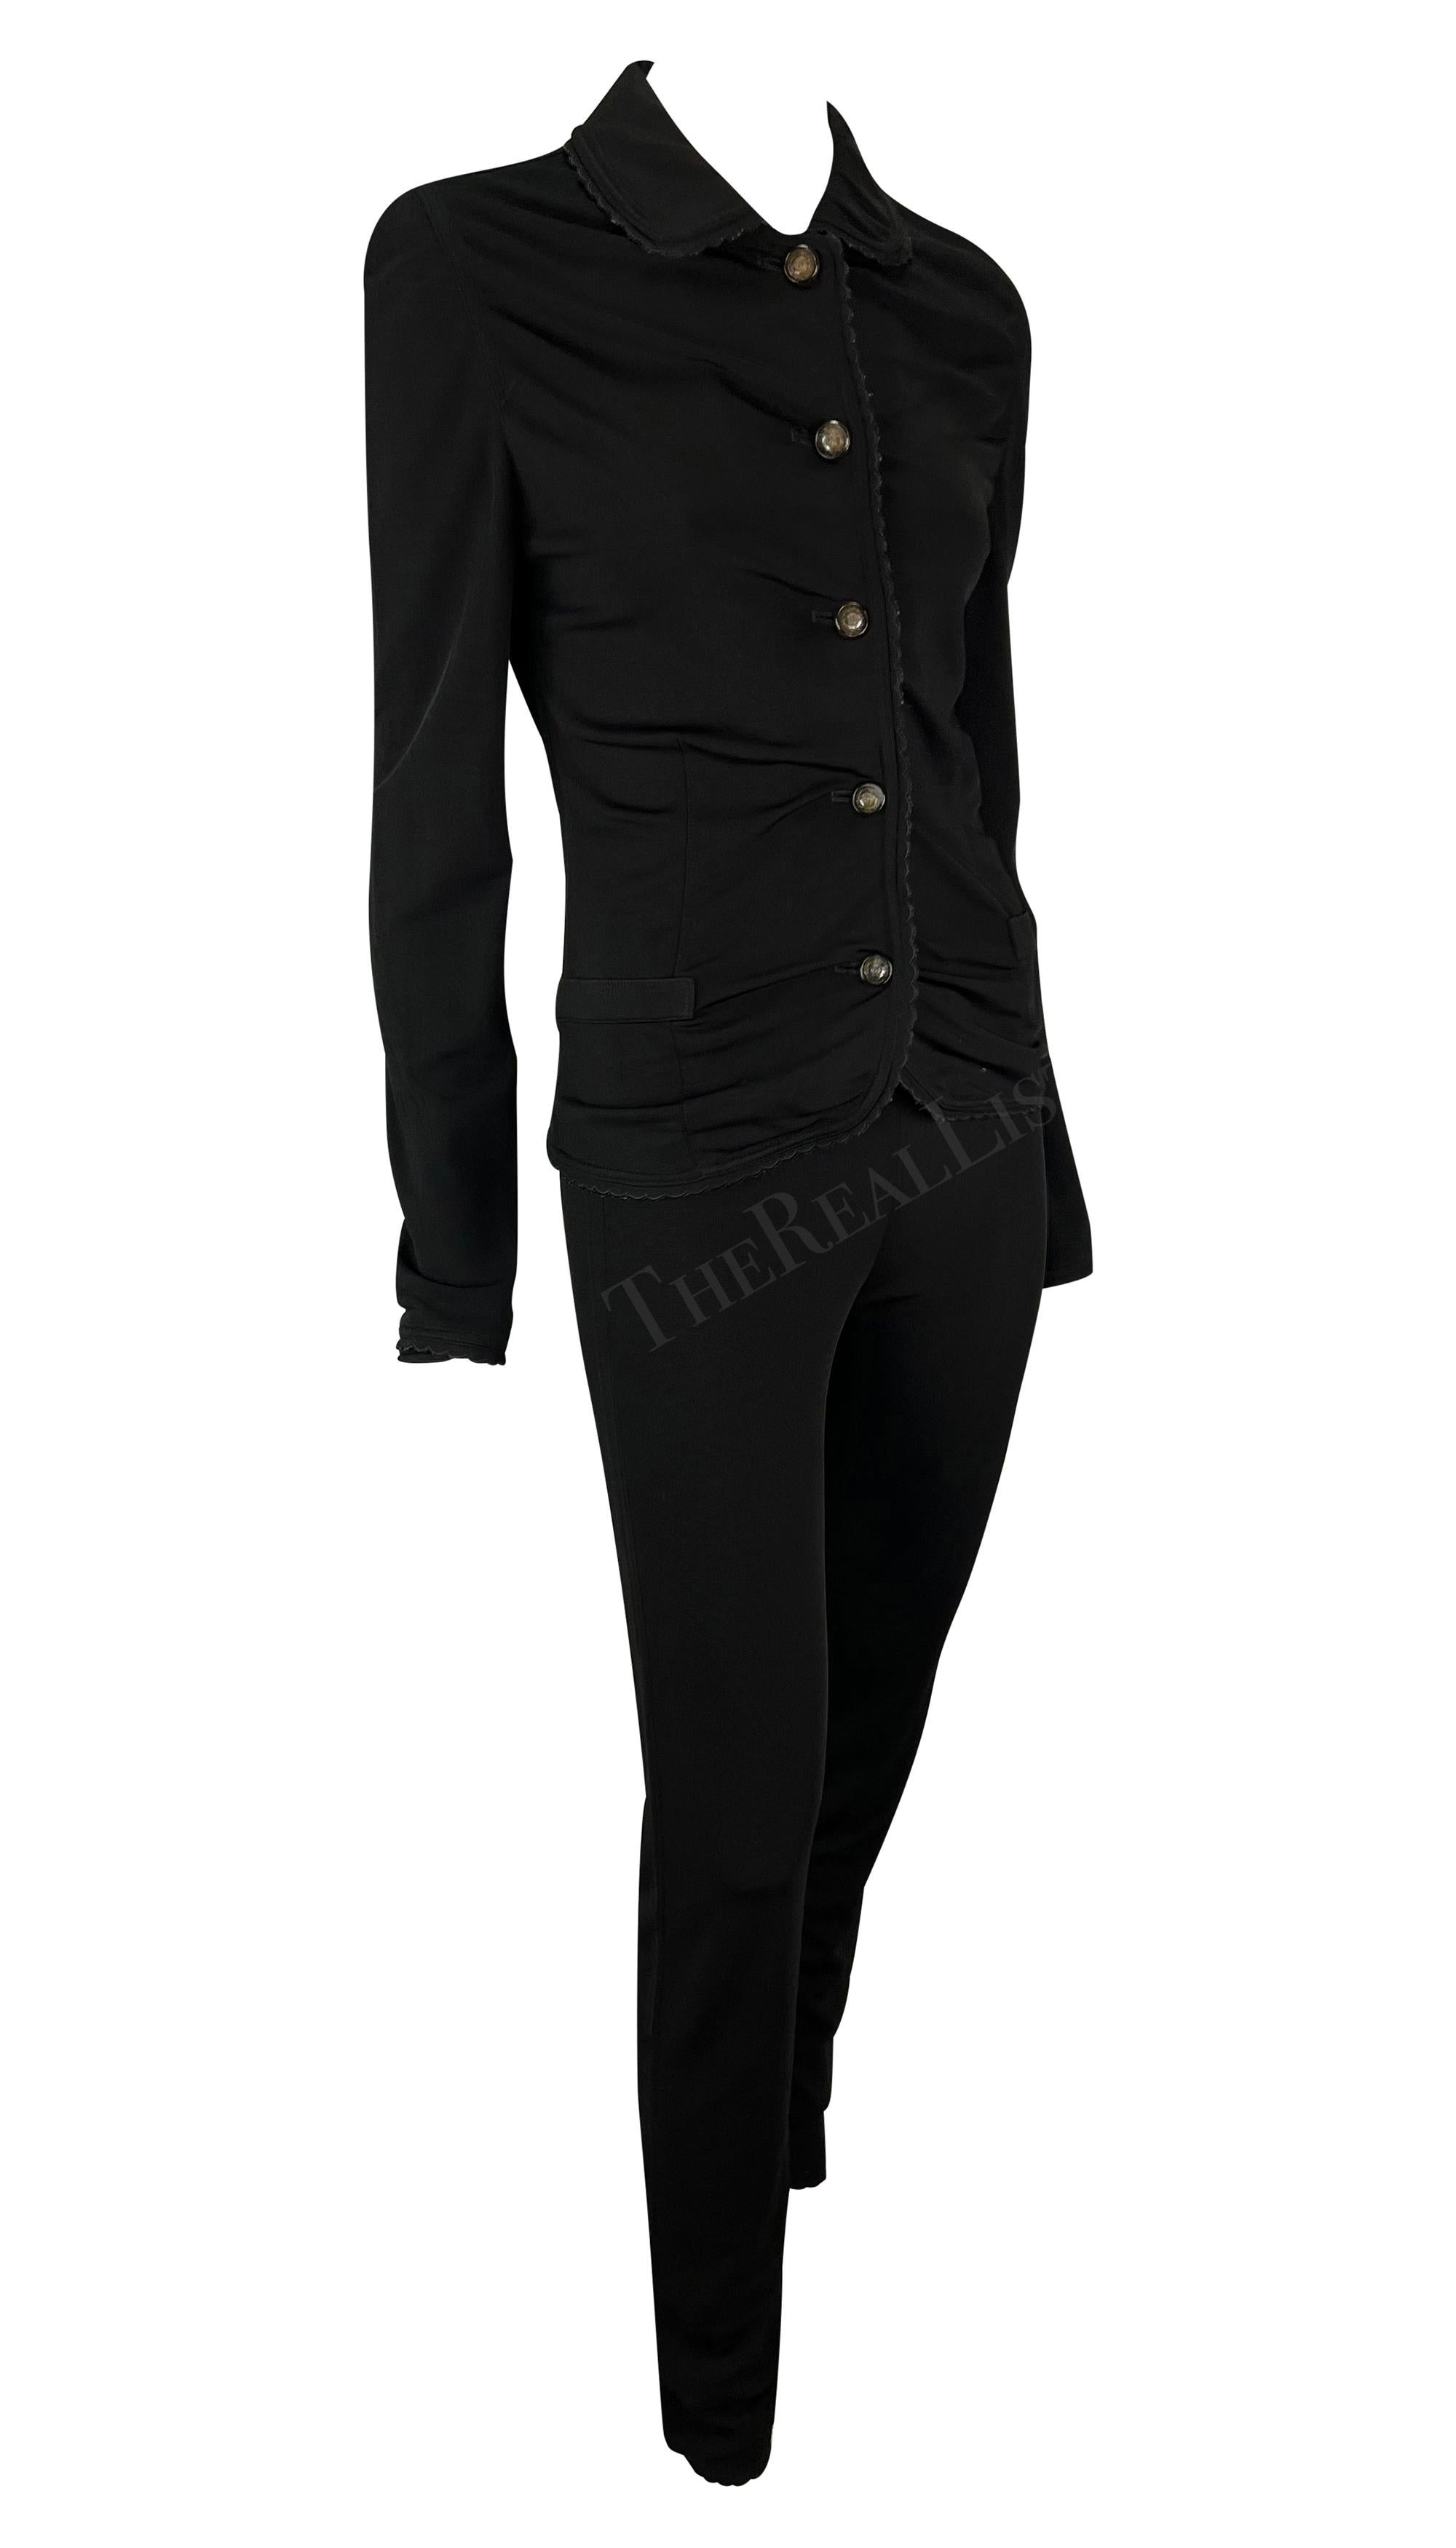 S/S 1997 Gianni Versace Black Scalloped Stretch Medusa Pant Set For Sale 2